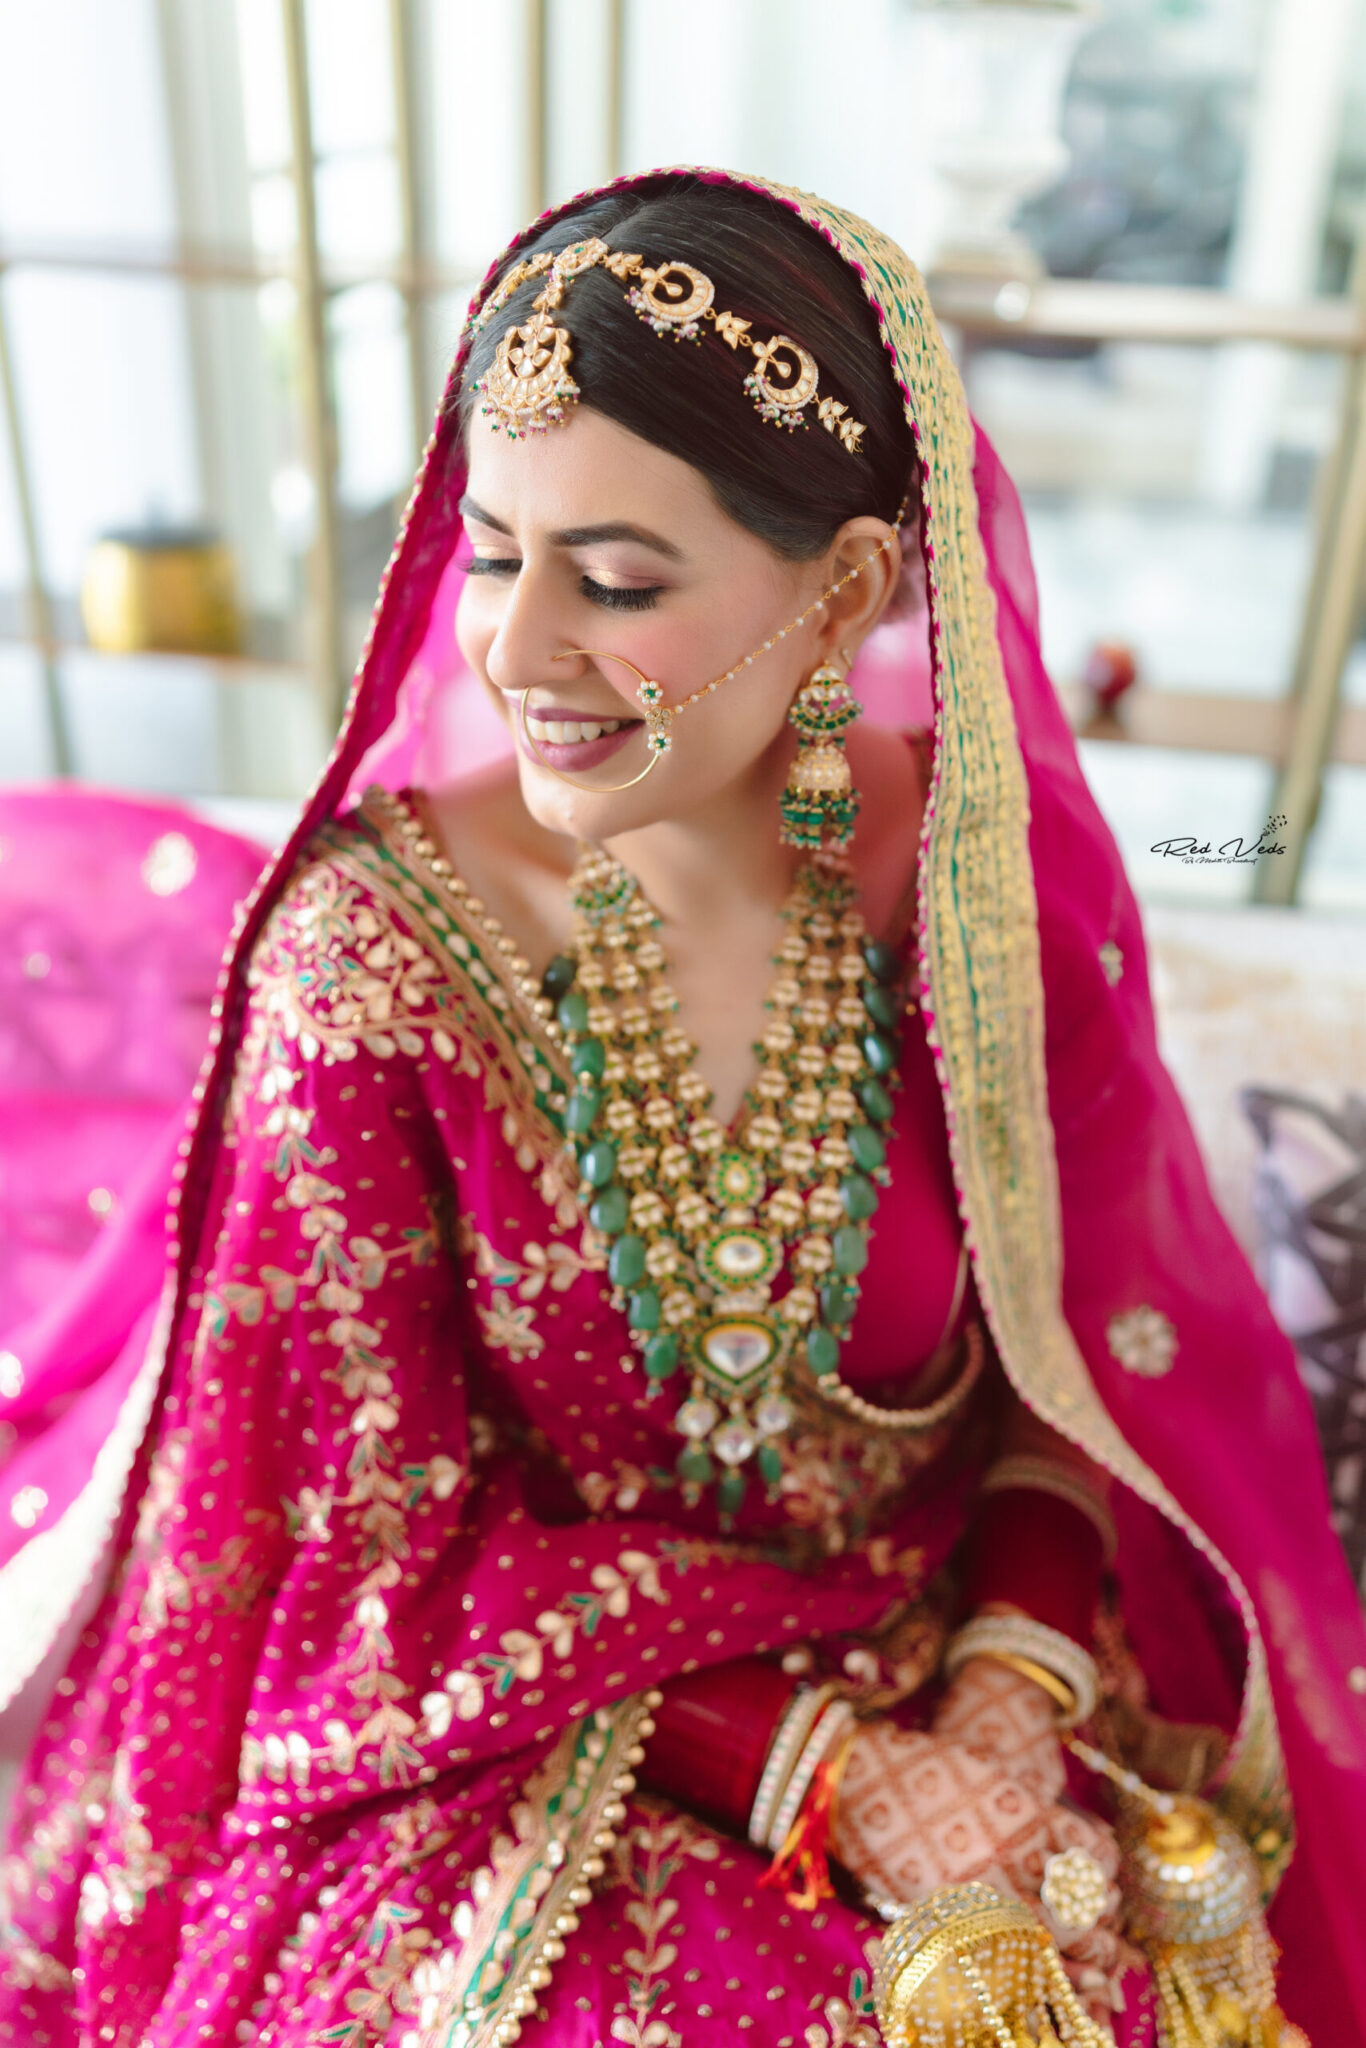 Designer Lehenga | Indian wedding poses, Indian bride poses, Indian wedding  photography poses